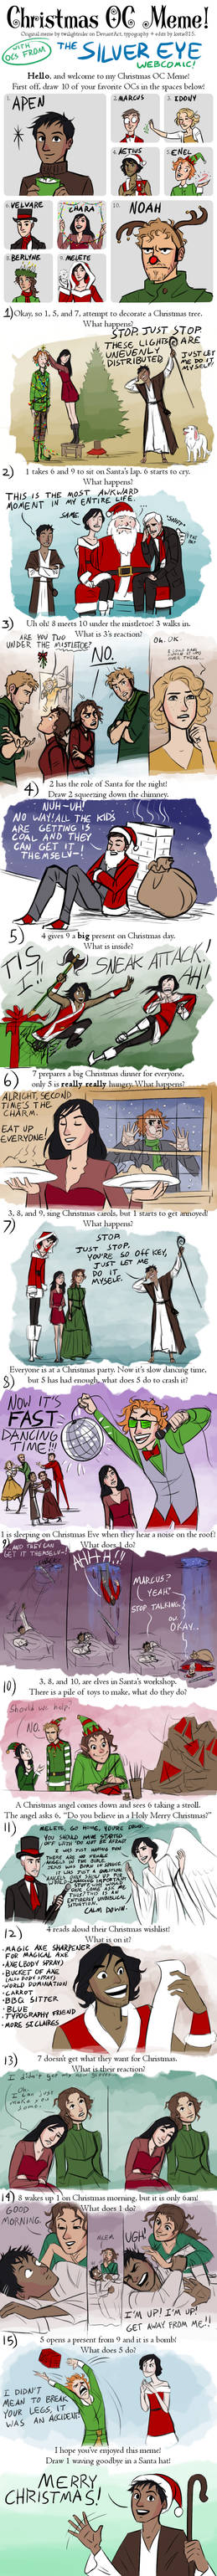 The Silver Eye - OC Christmas Meme